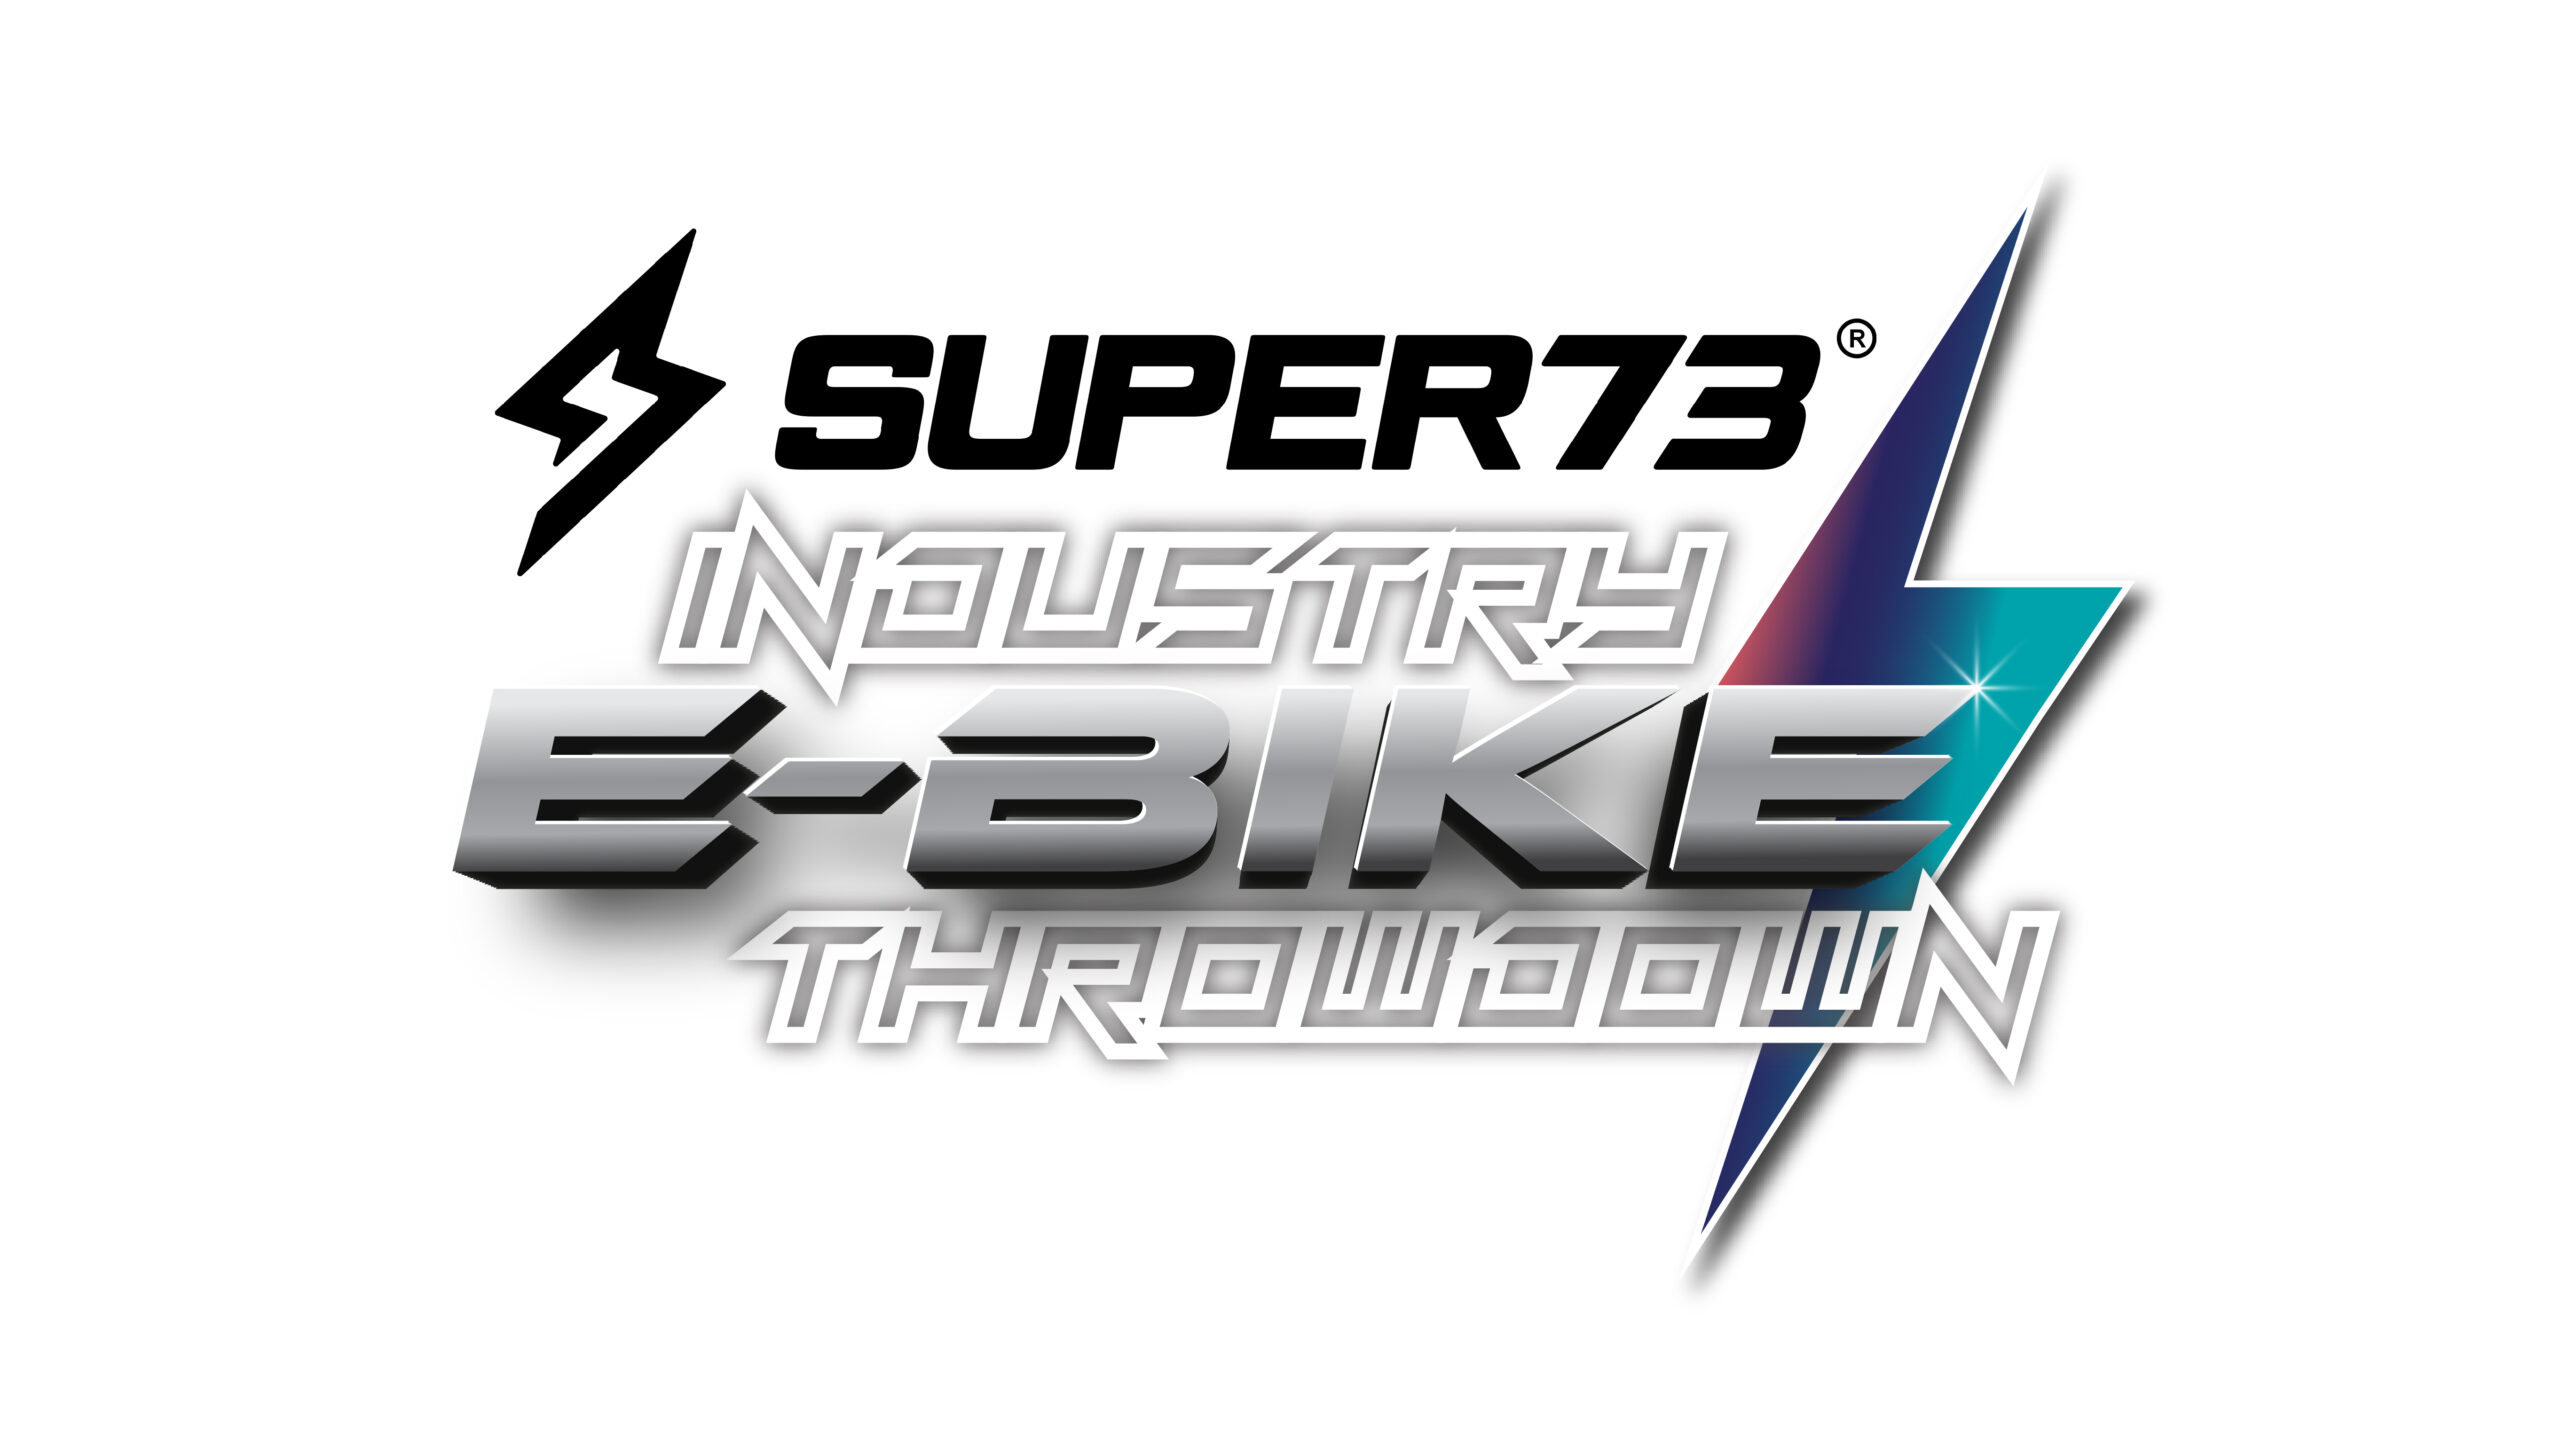 Super73 named title sponsor of Industry E-Bike Throwdown at AIMExpo.